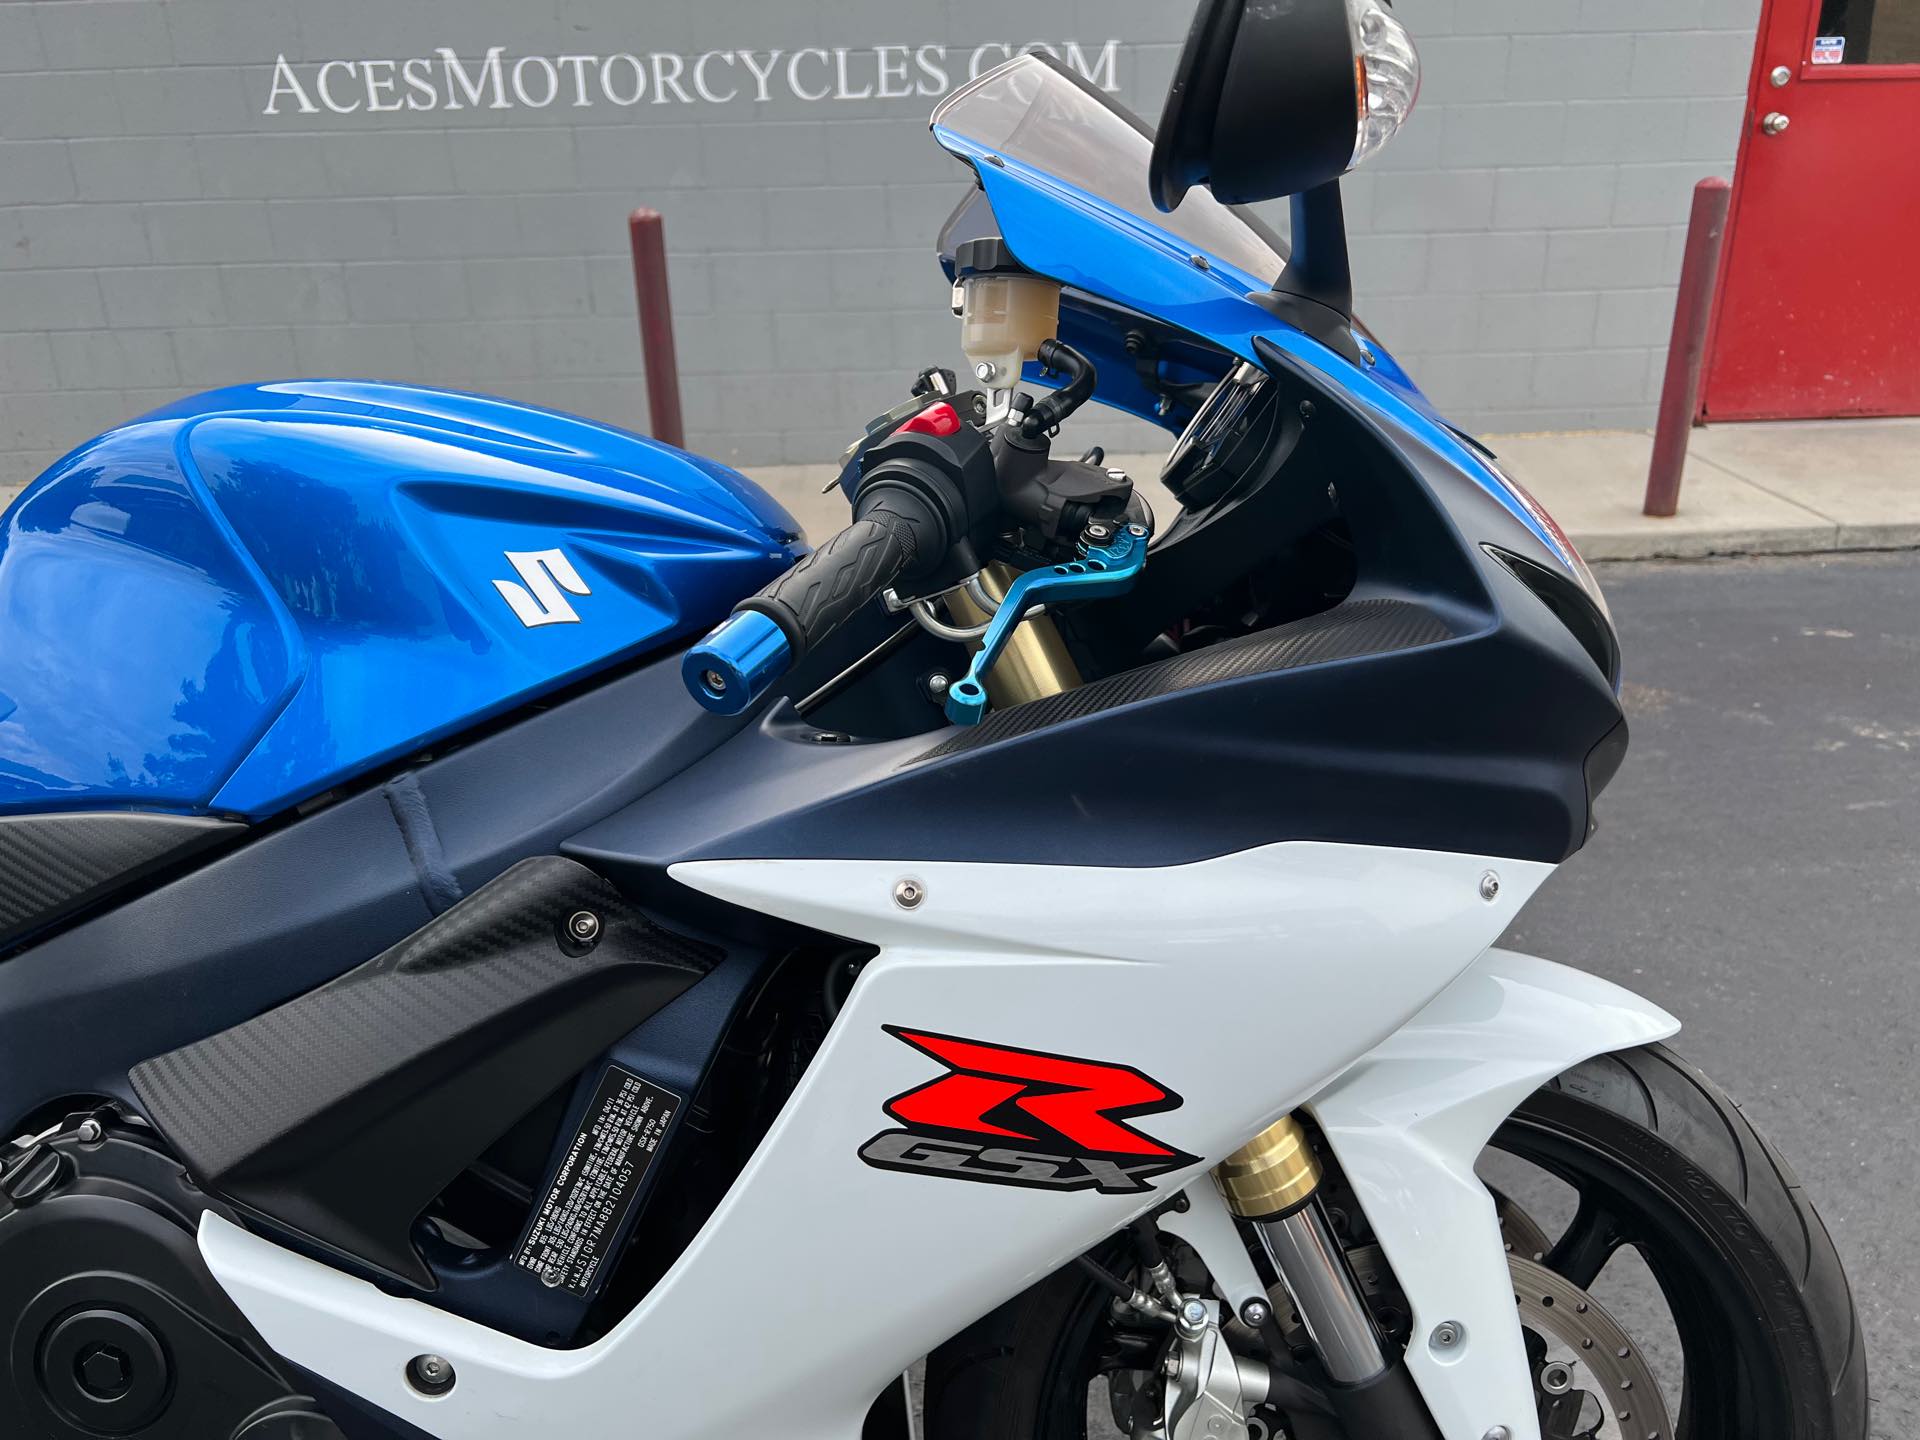 2011 Suzuki GSX-R 750 at Aces Motorcycles - Fort Collins